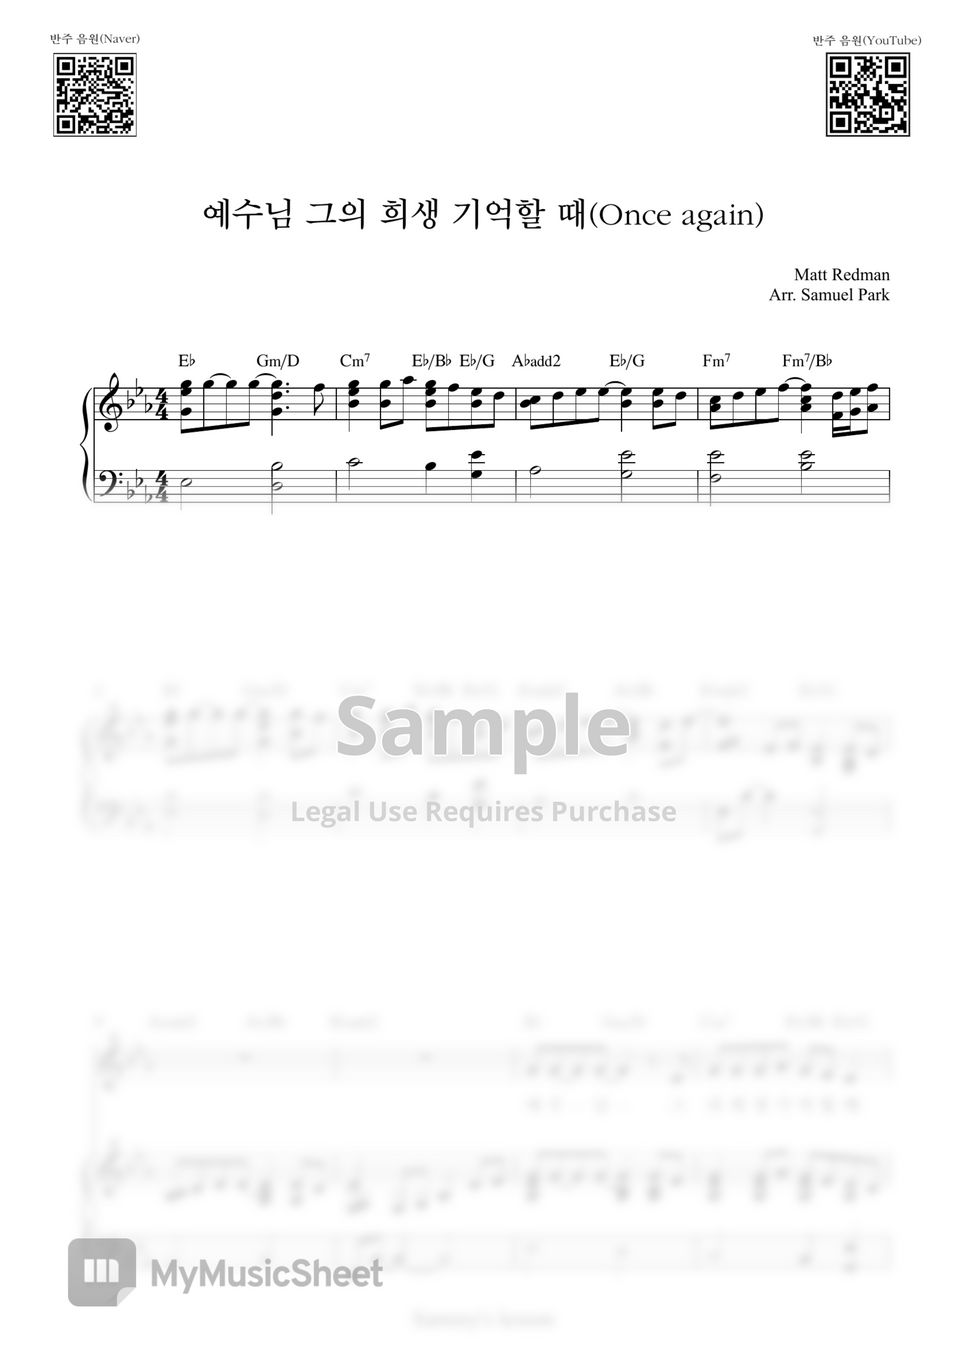 Matt Redman - 예수님 그의 희생 기억할 때 (Once again) (Piano Cover) by Samuel Park